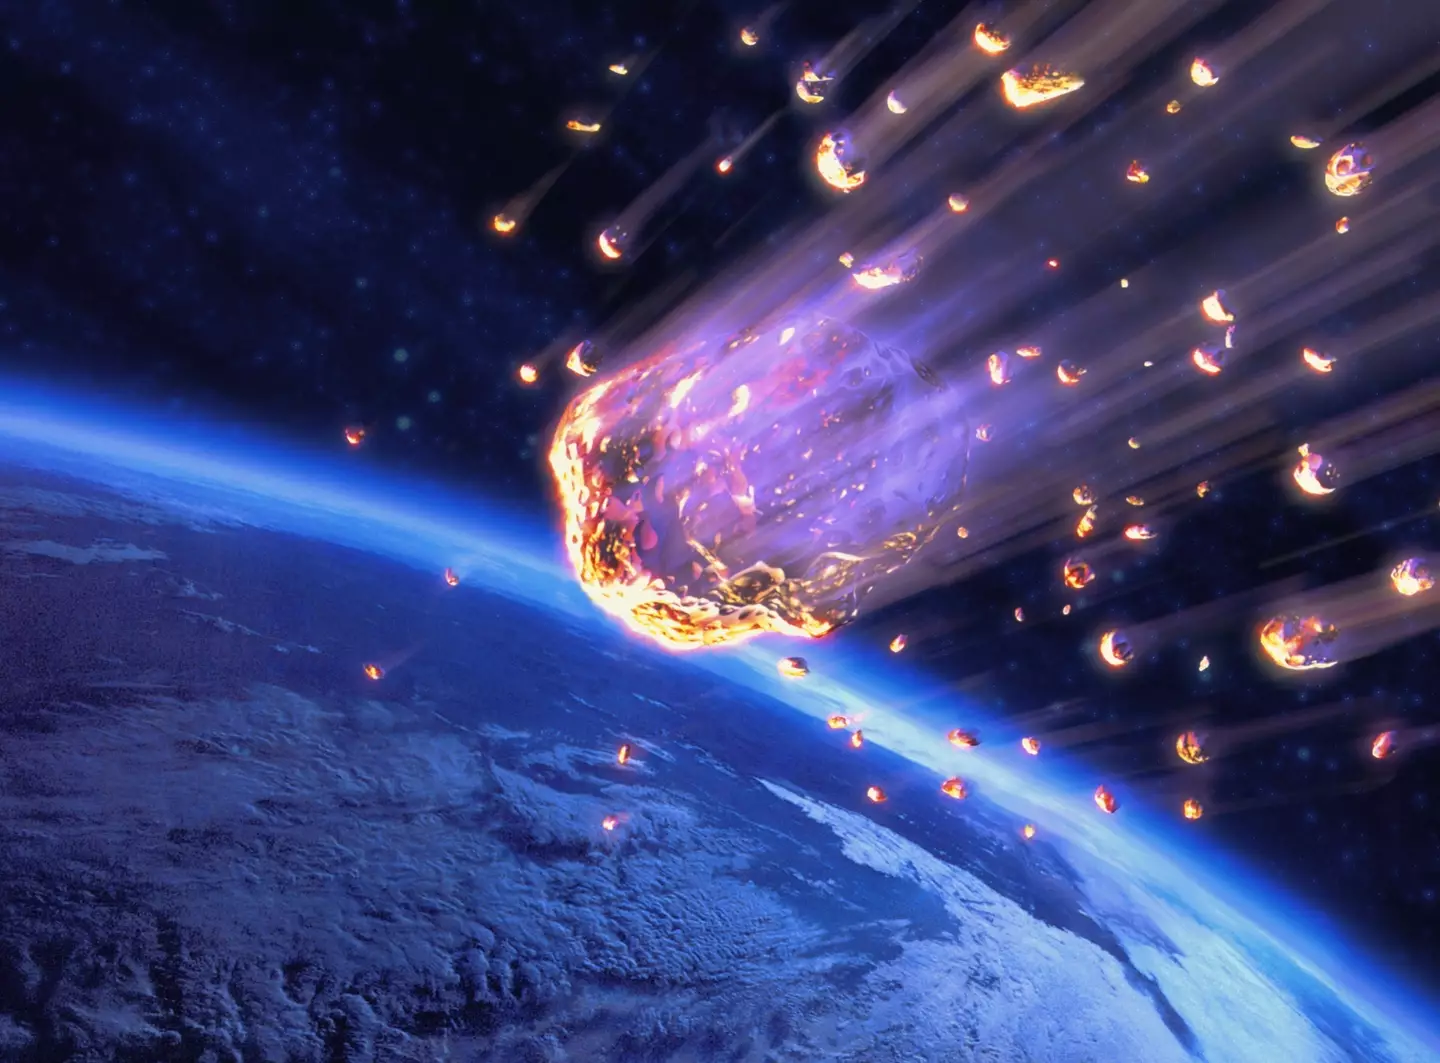 Meteors often break up in the atmosphere.